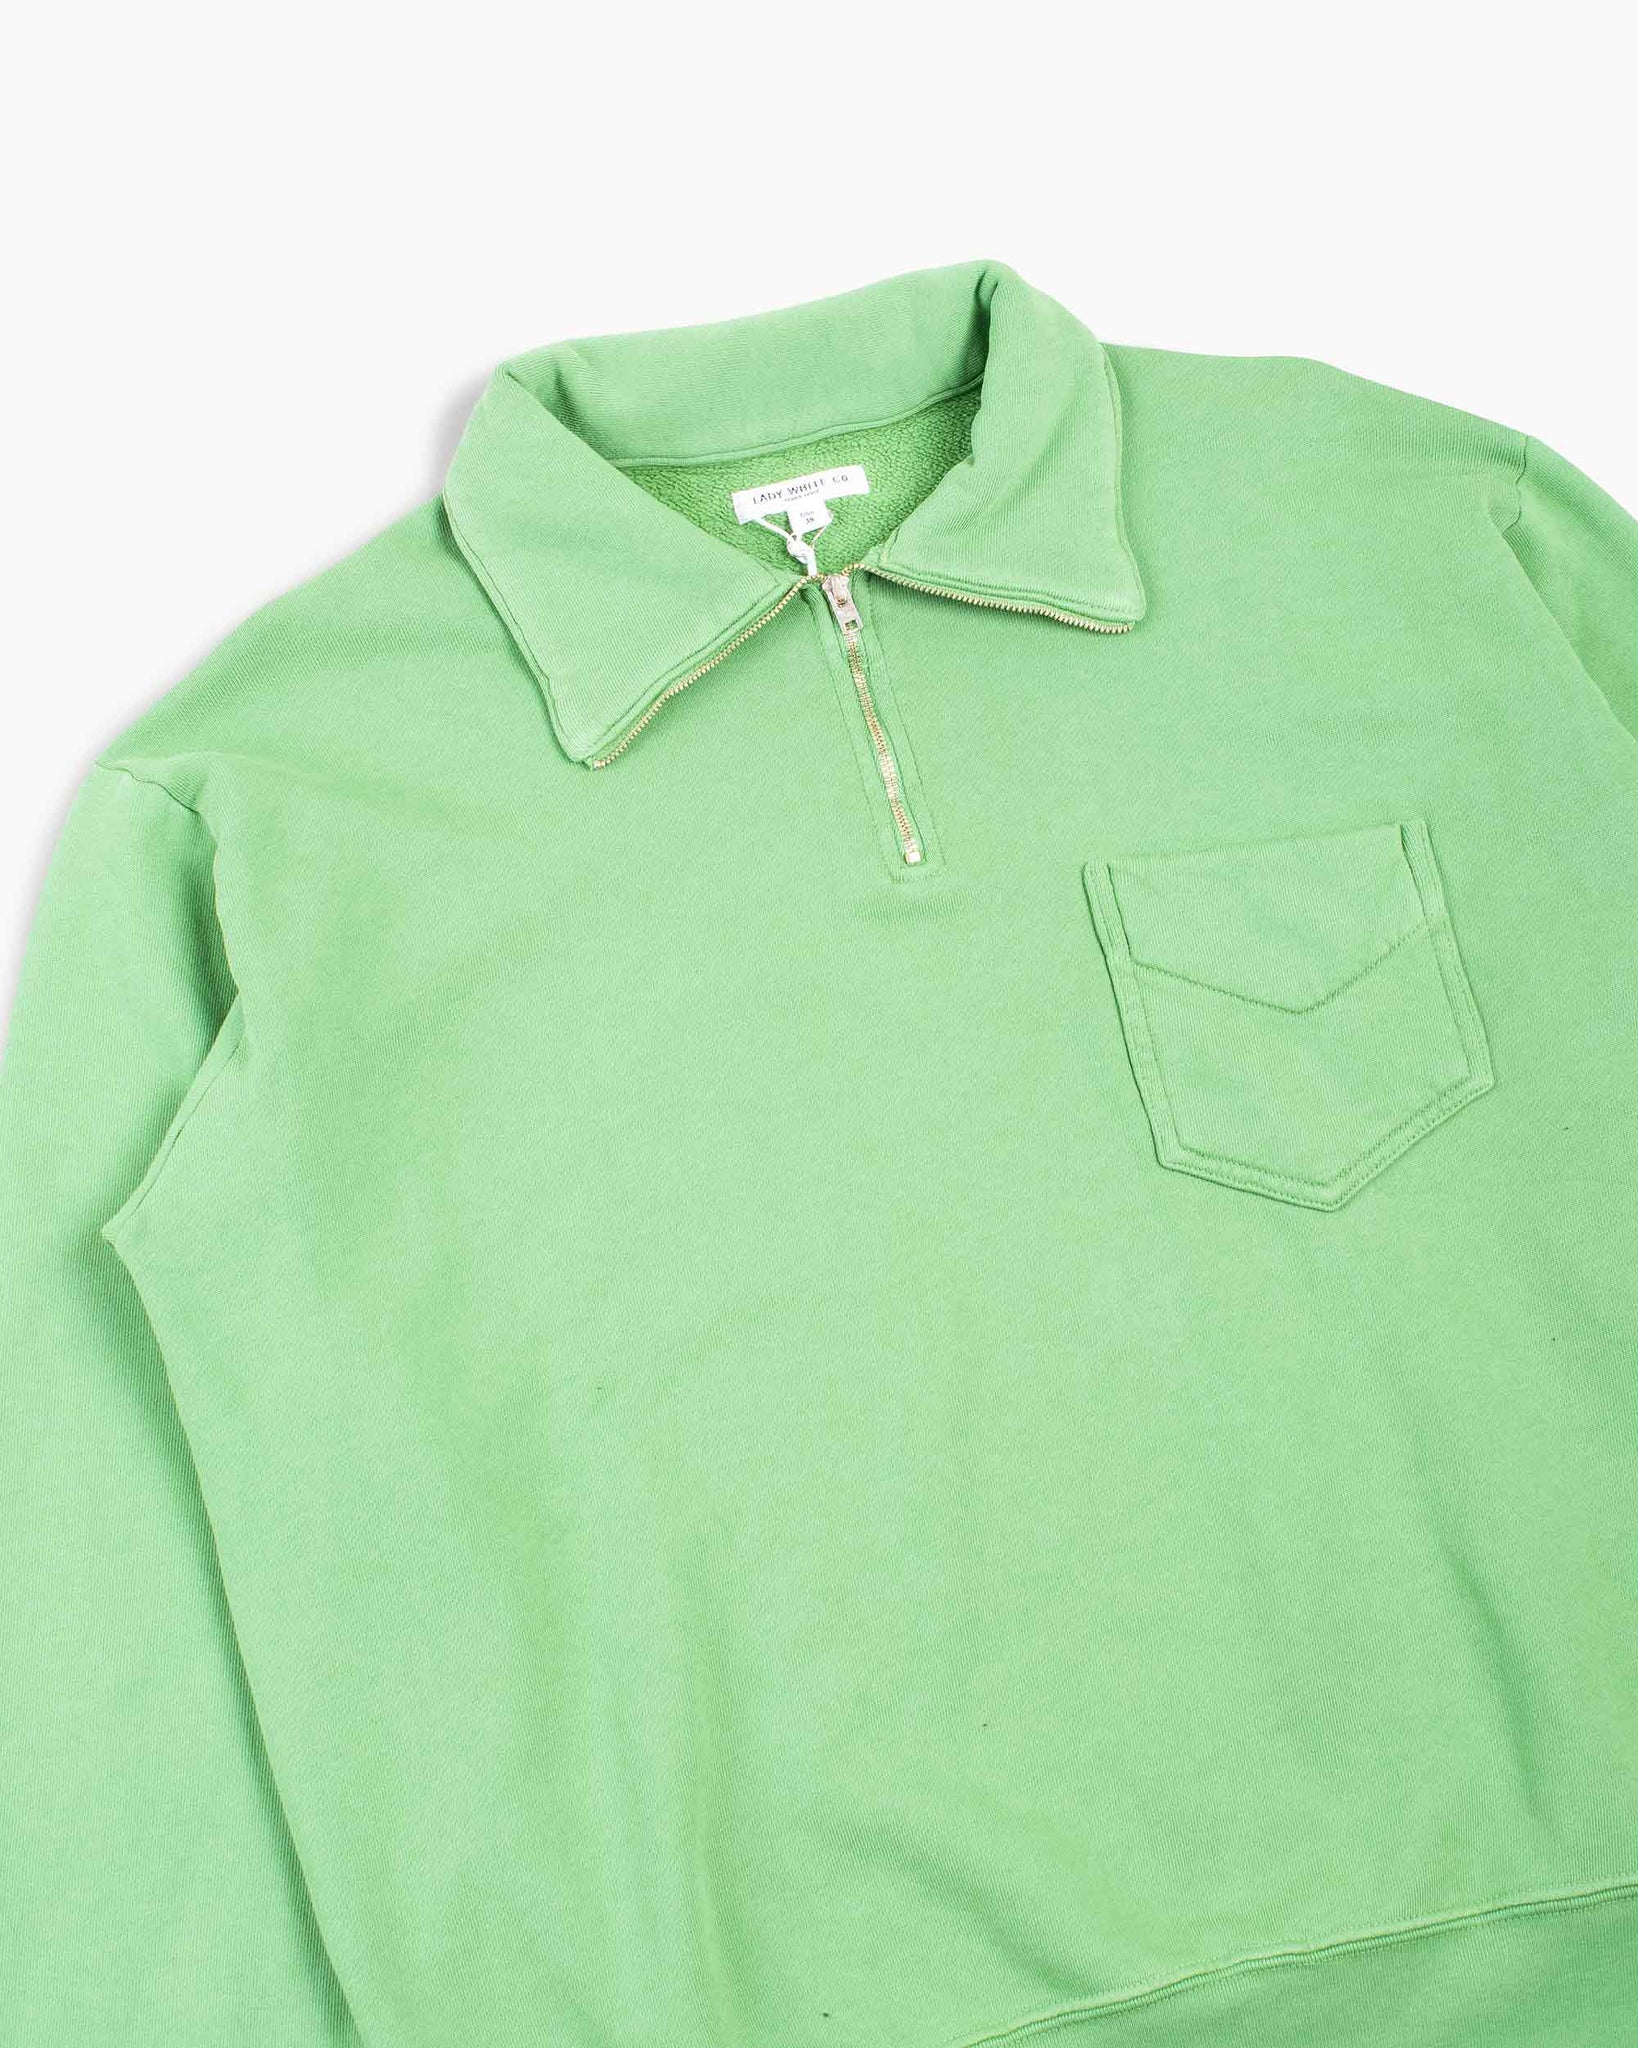 Lady White Co. Quarter Zip Sweatshirt Faded Green Details